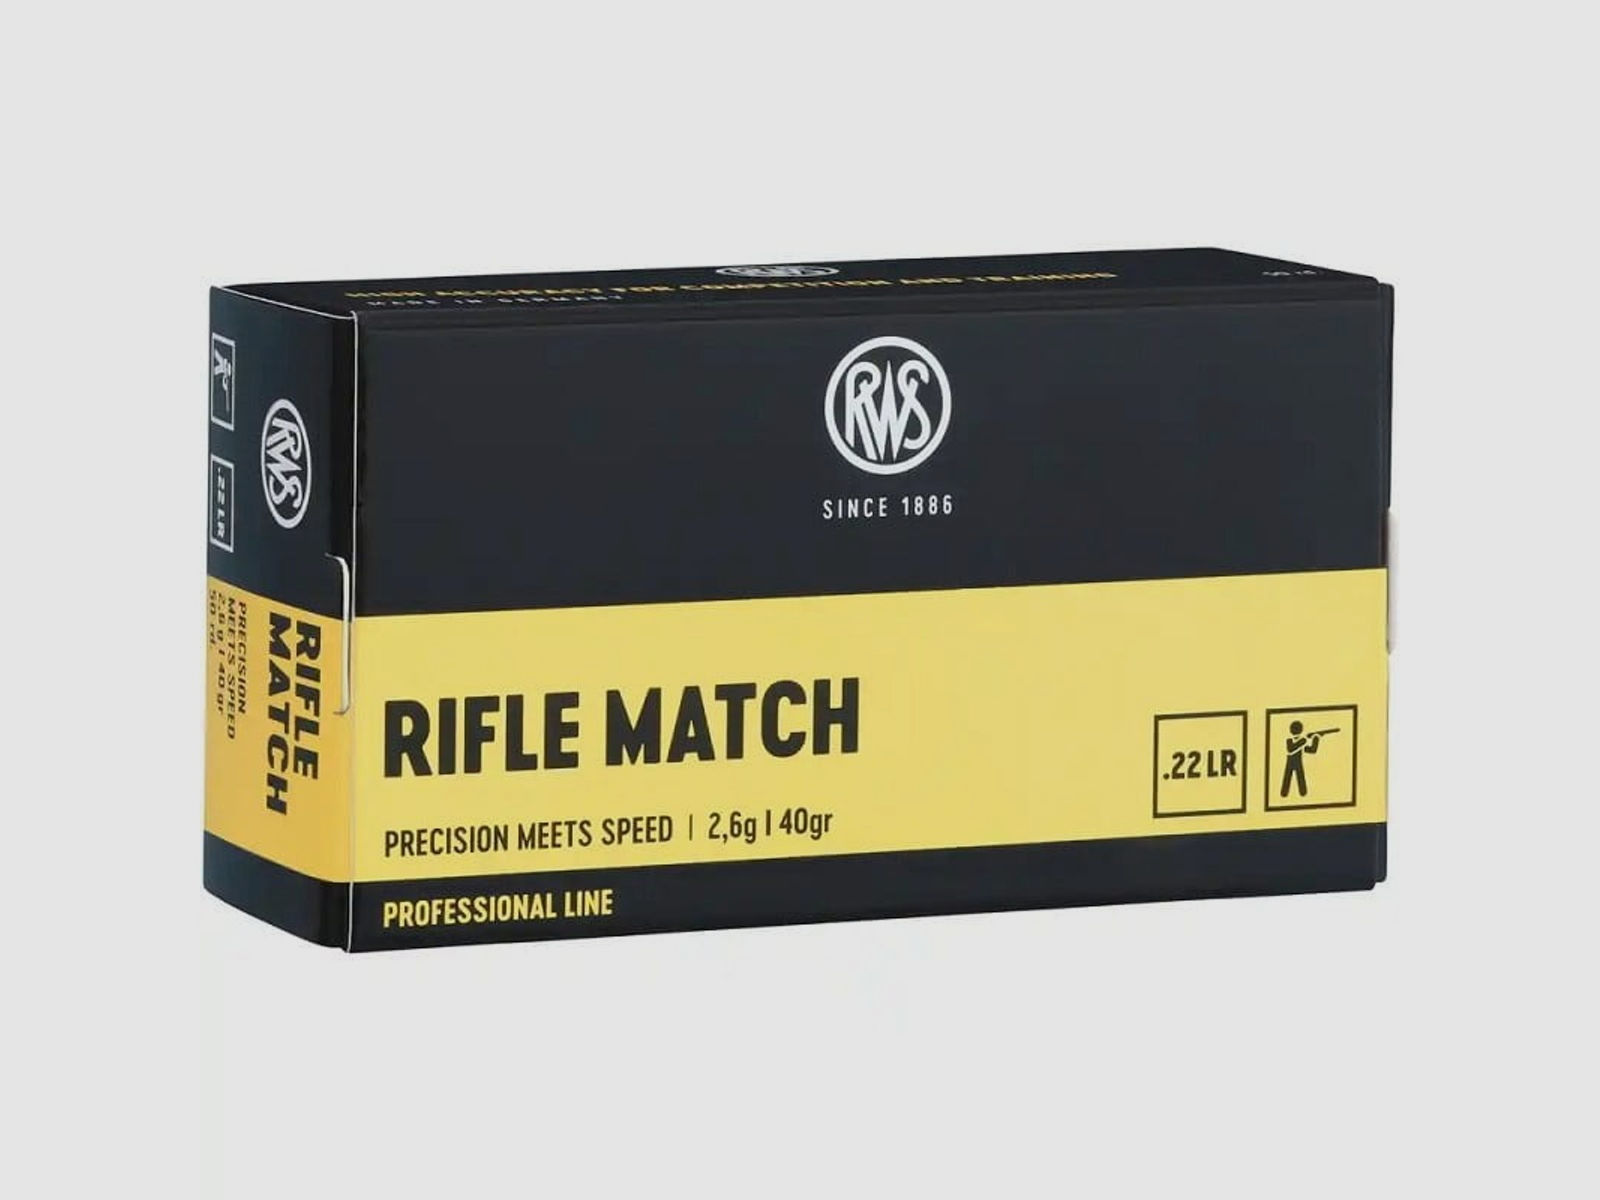 RWS .22lfb Rifle Match 2,6g